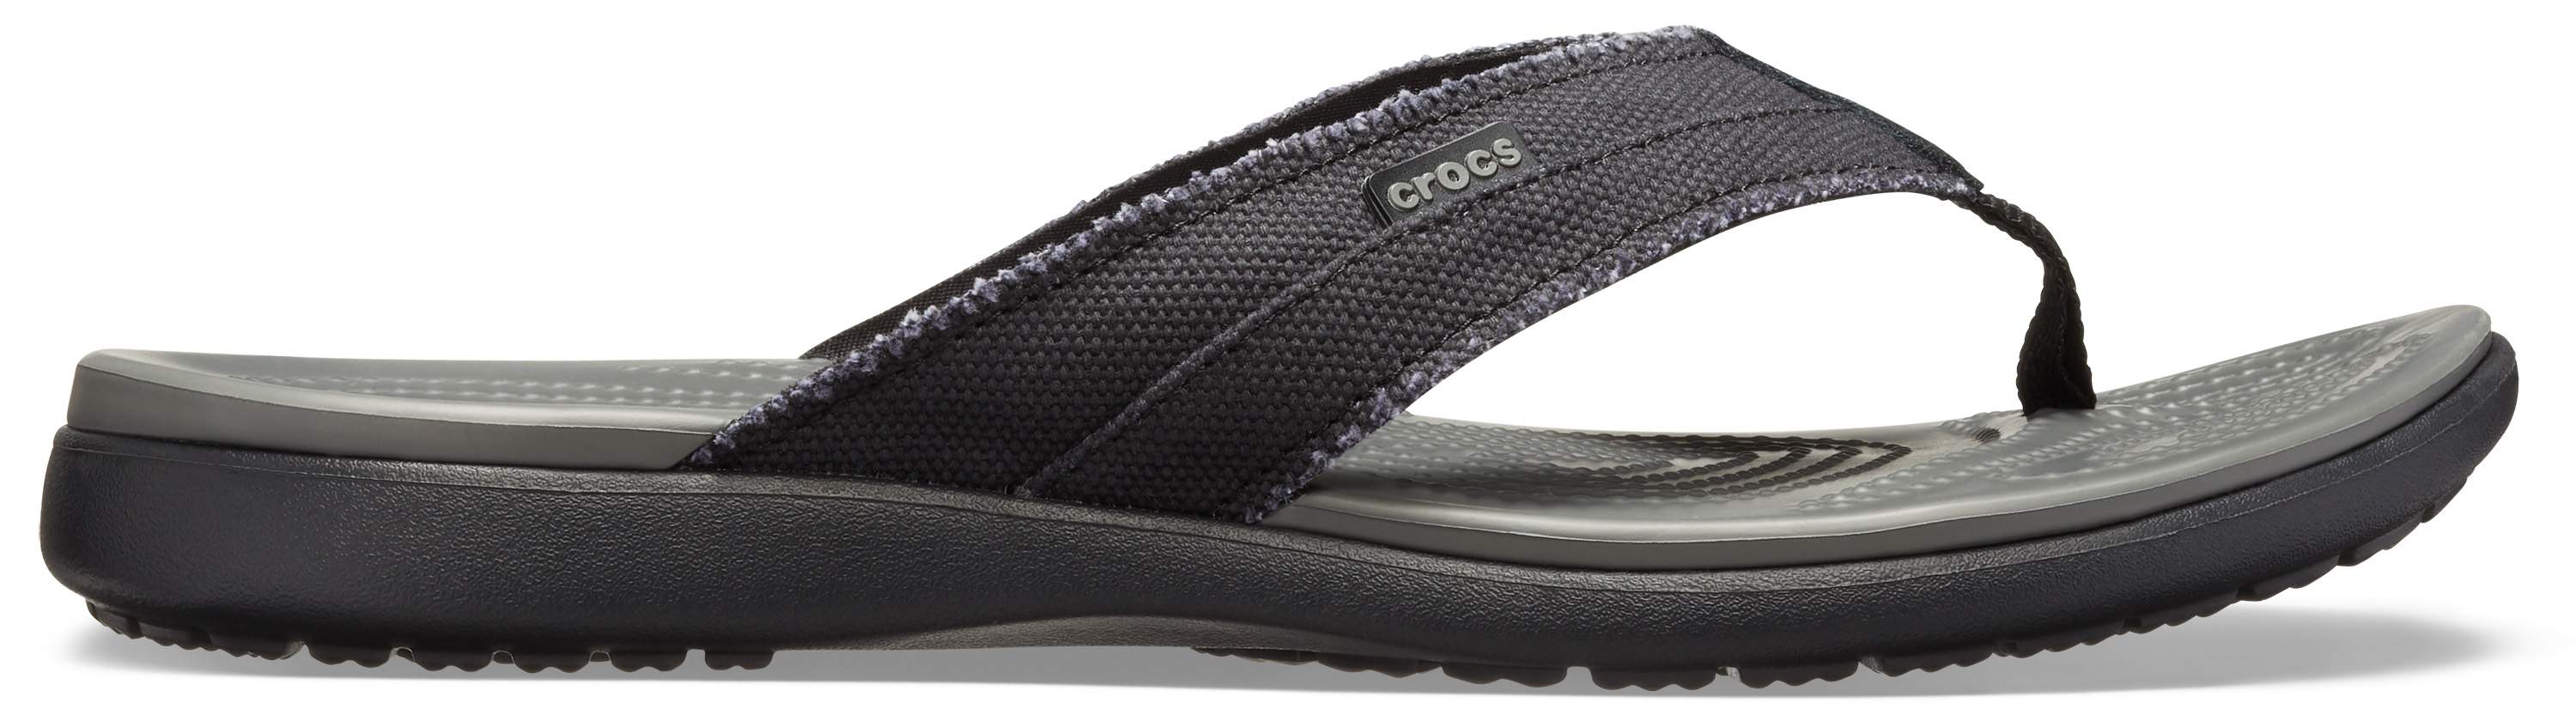 crocs mens leather flip flops